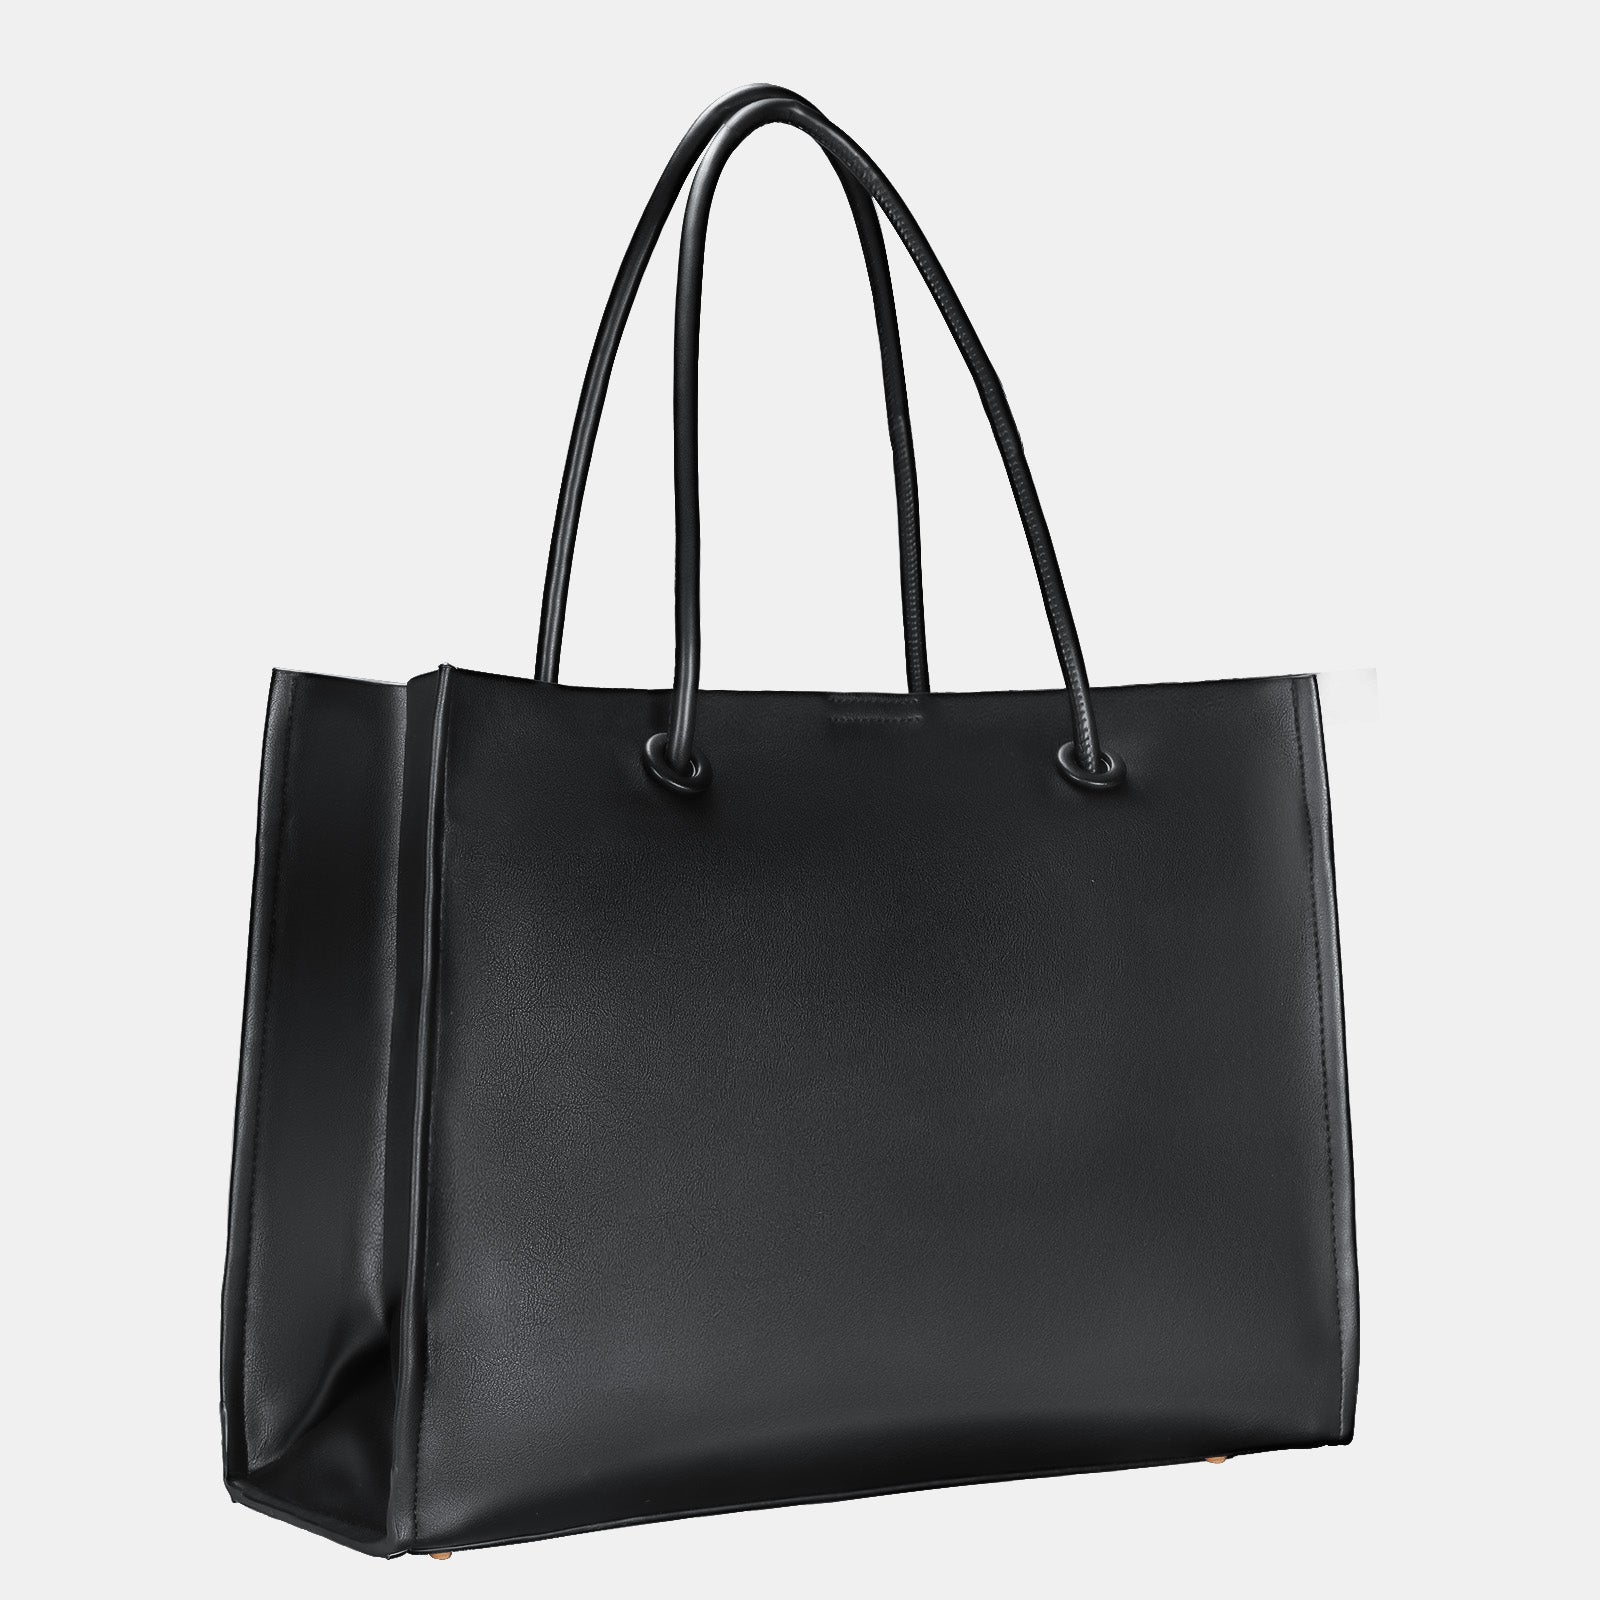 Bertasche Women's Leather Tote Bag Black